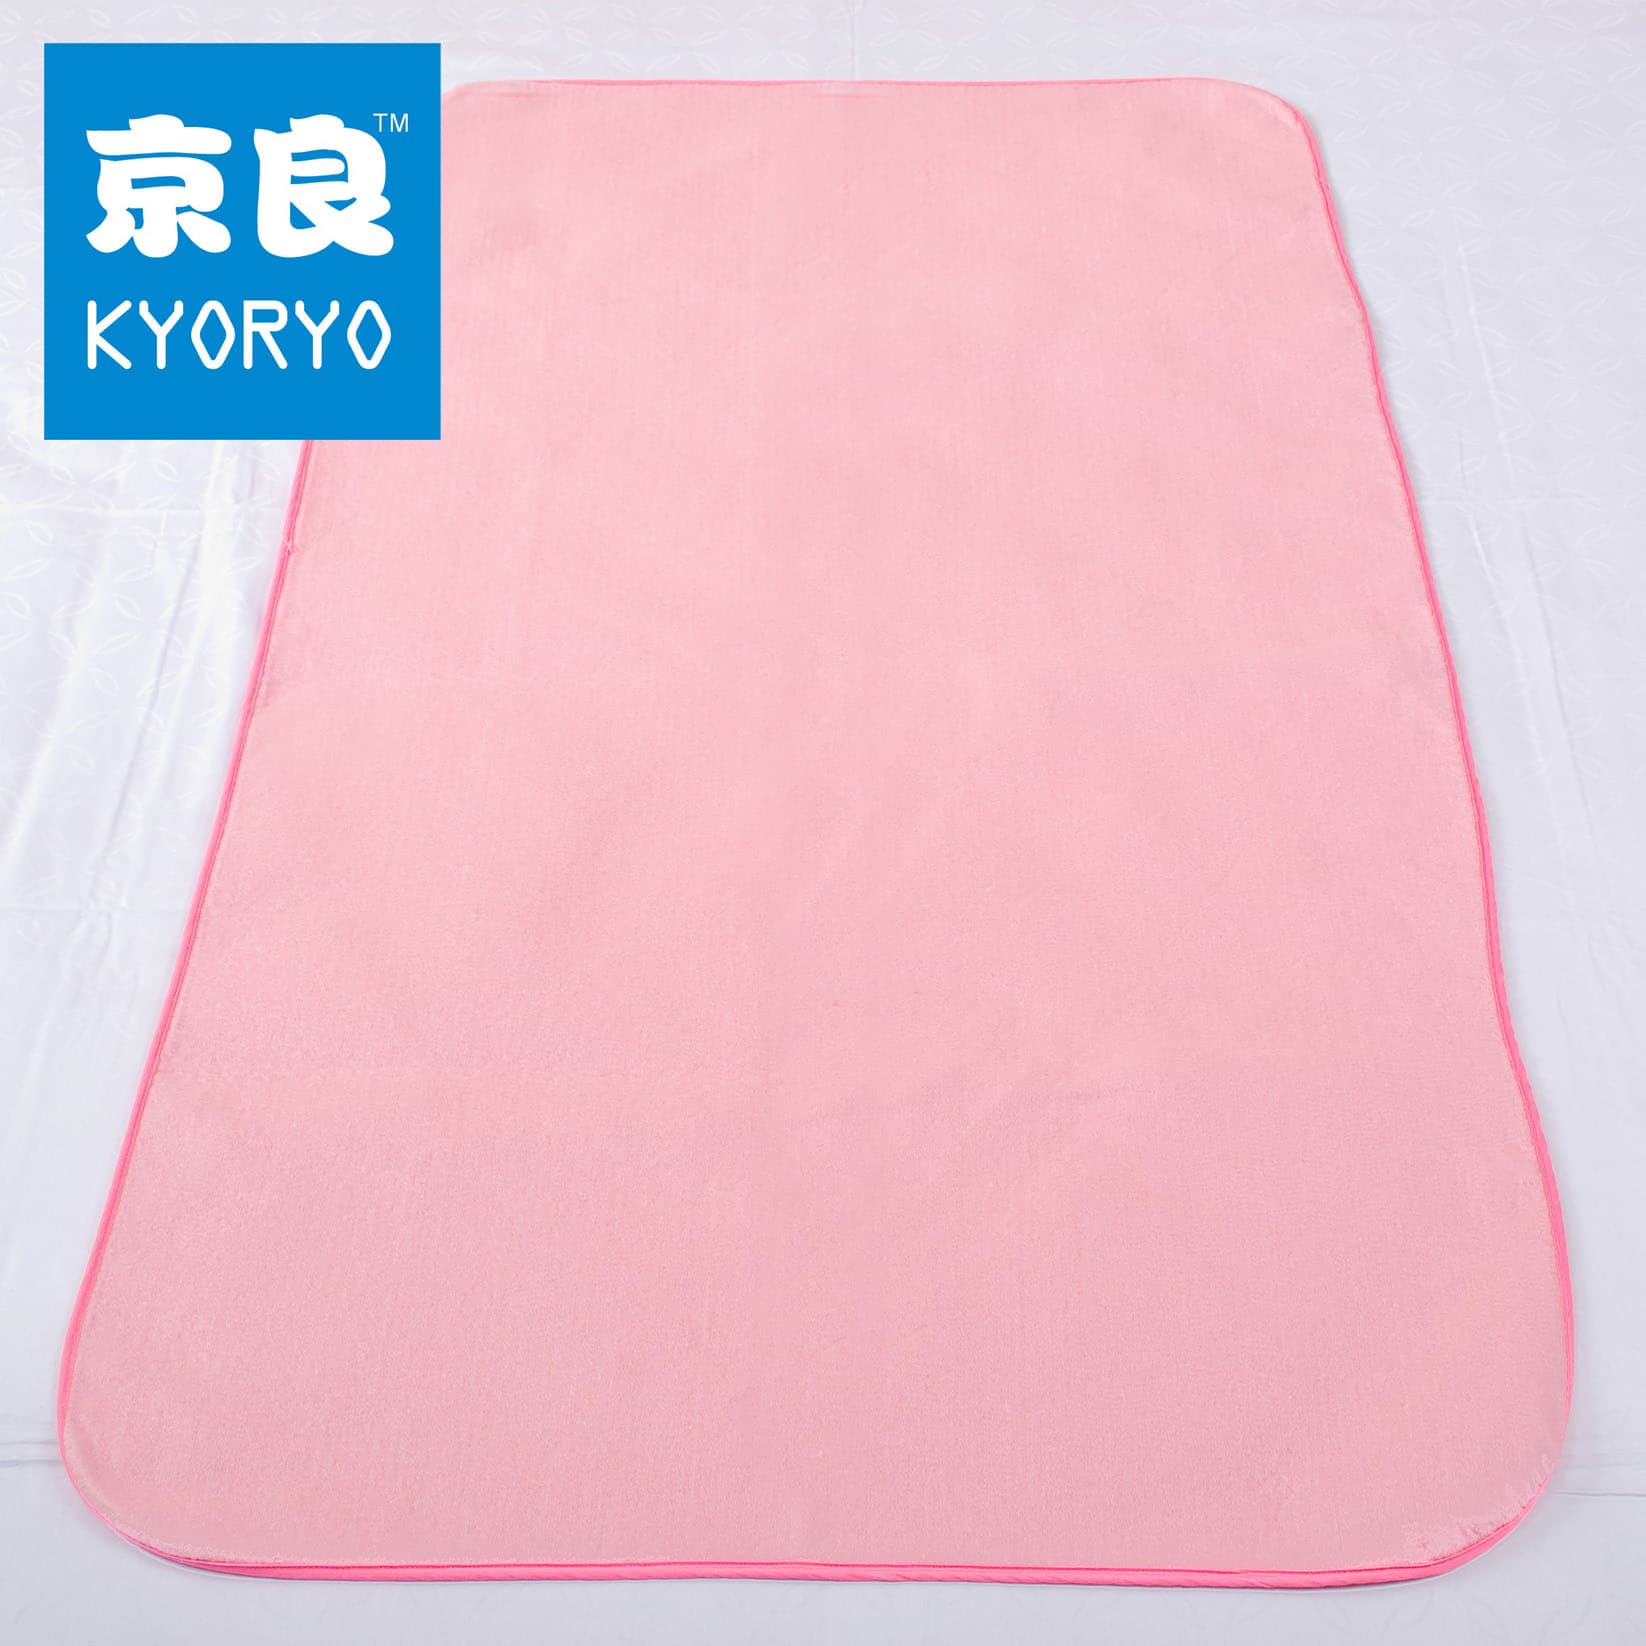 Kyoryo hygroscopic Moisture pad